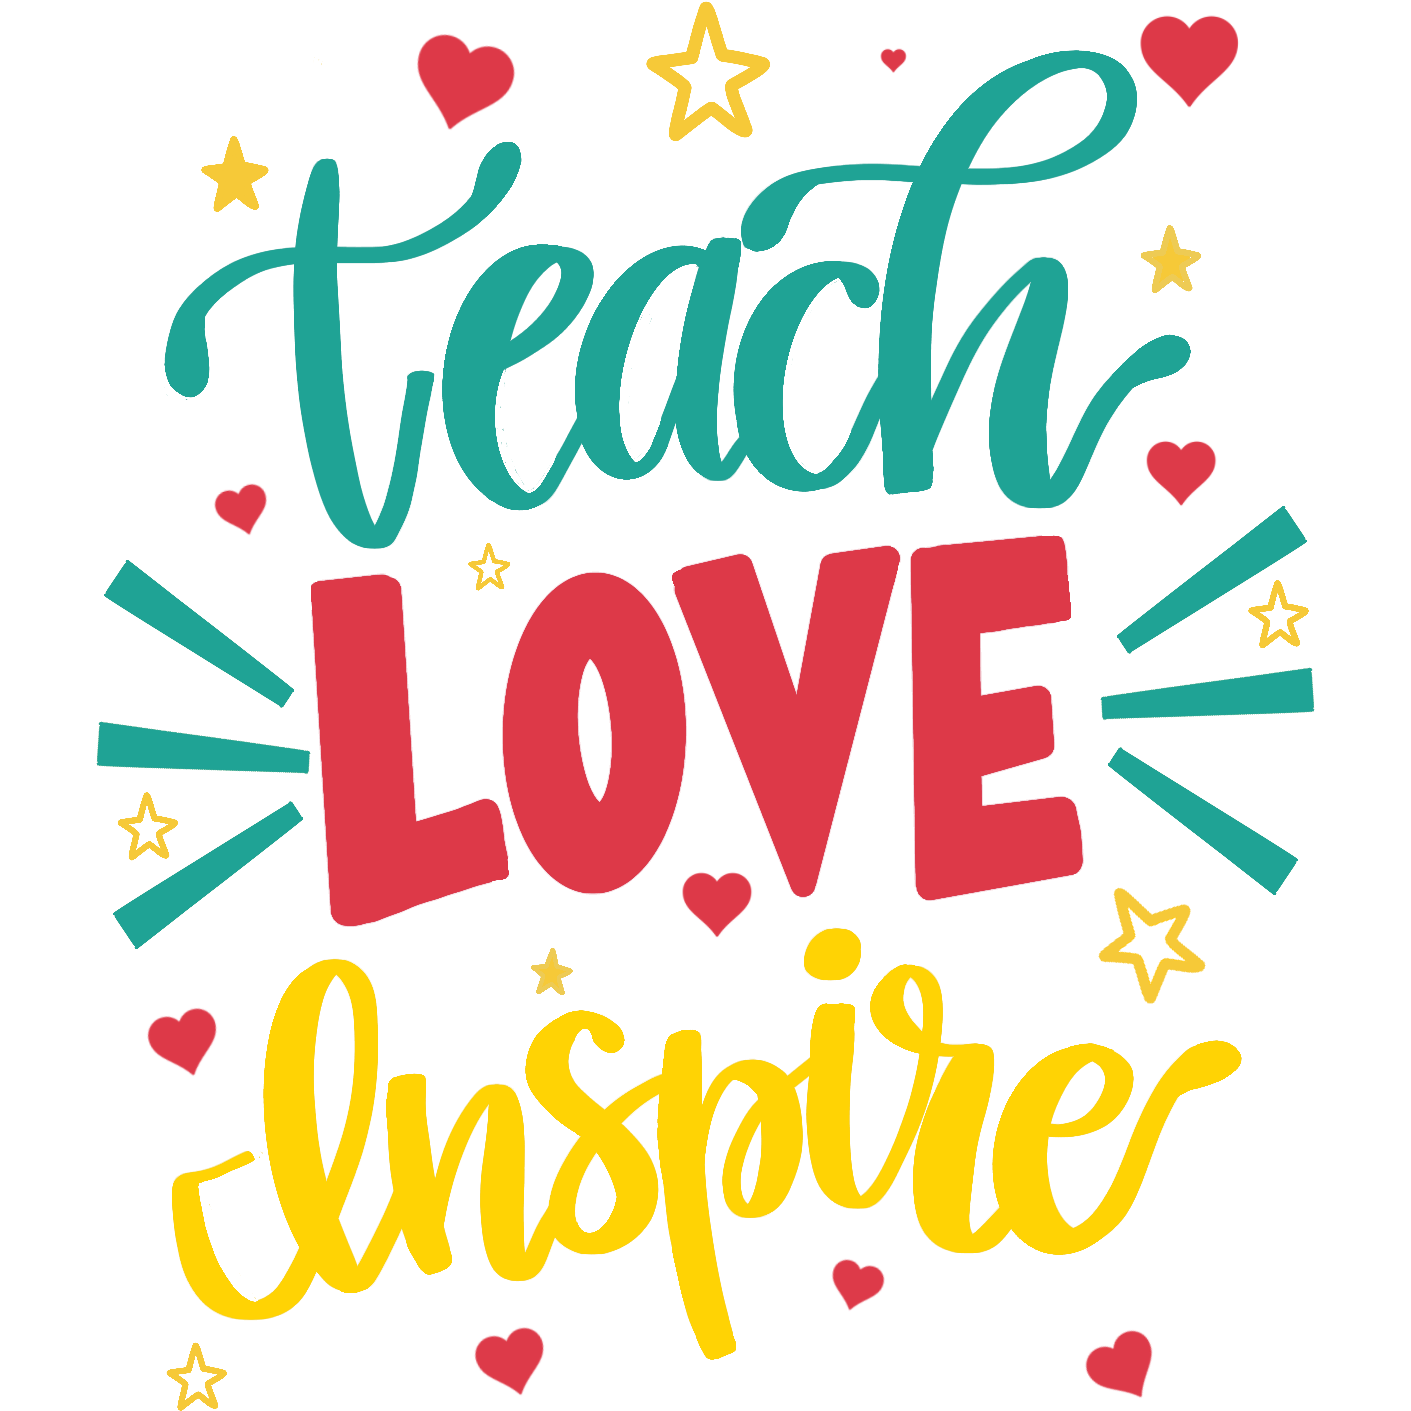 Teach Love Inspire - Greeting Card | teacher, teacher appreciation, teacher card